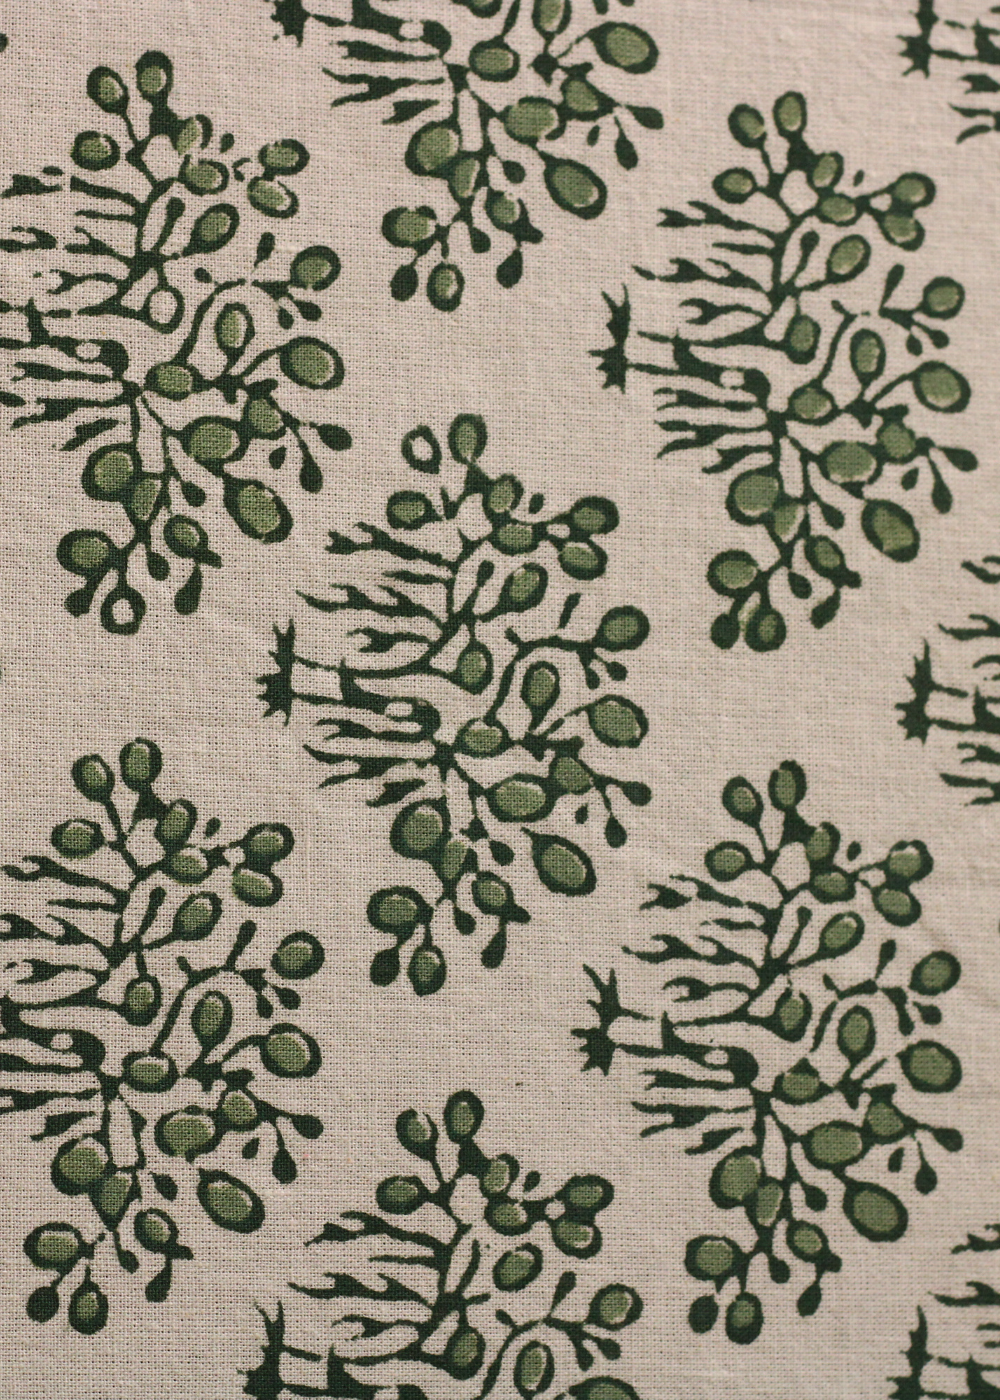 Close up shot of table cloth